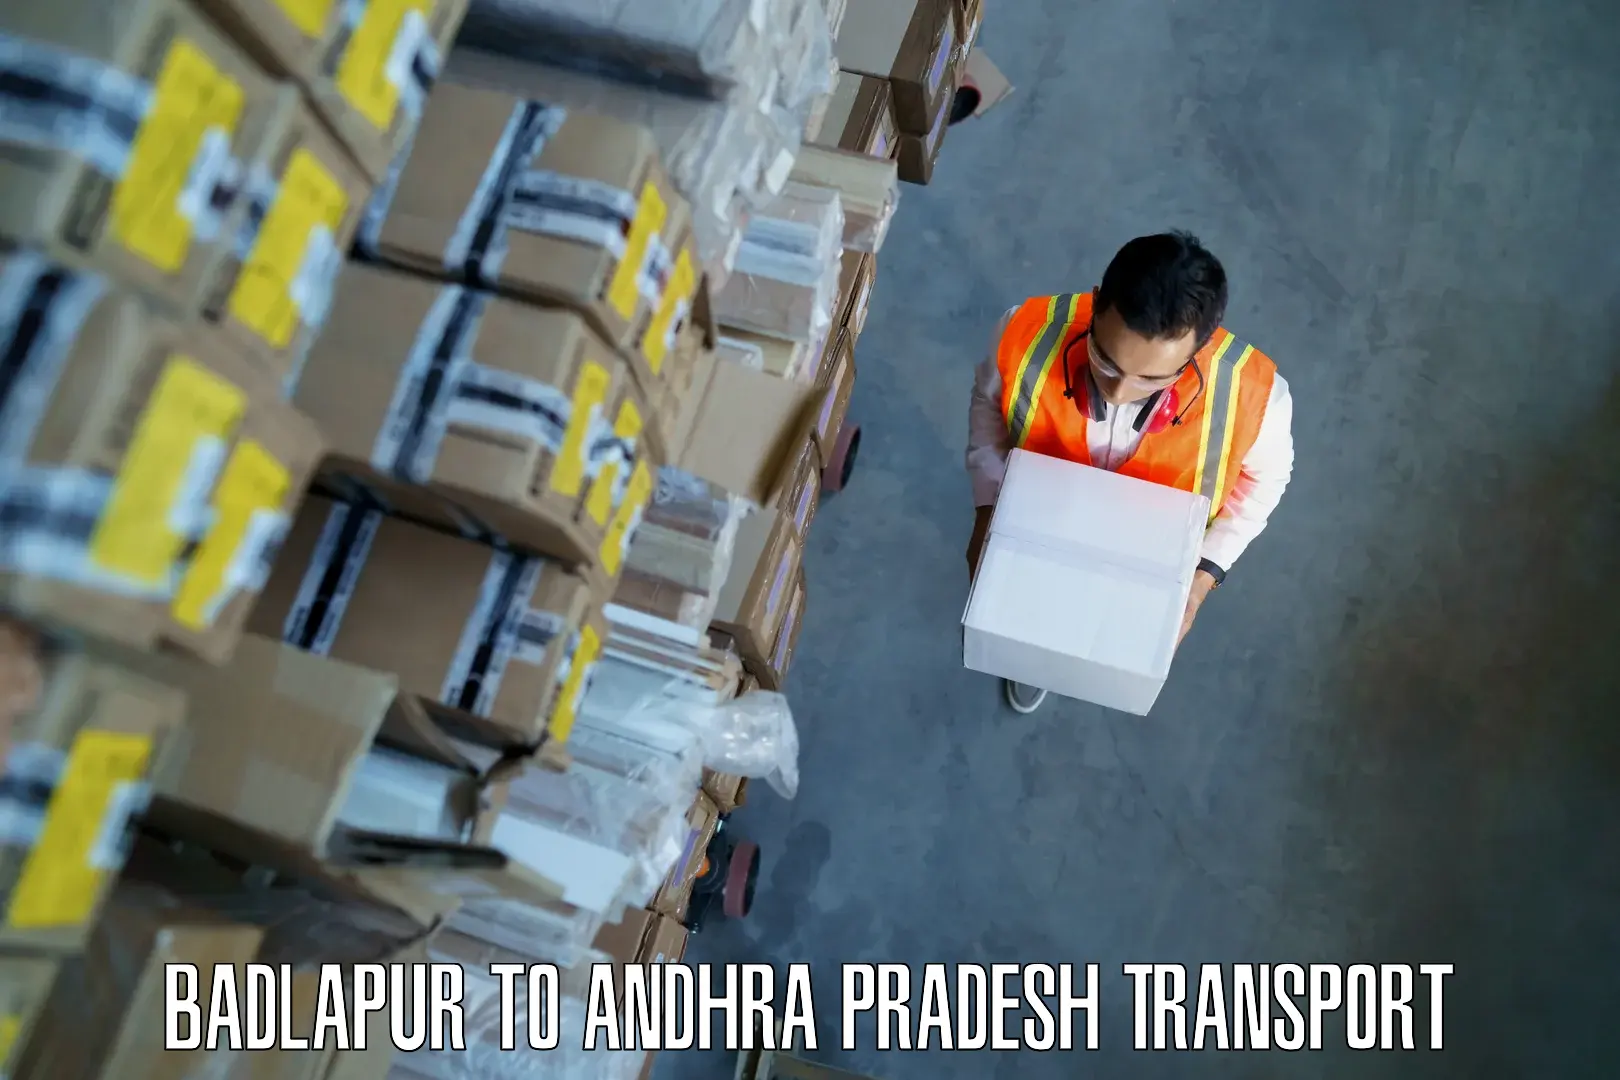 Part load transport service in India Badlapur to Andhra Pradesh